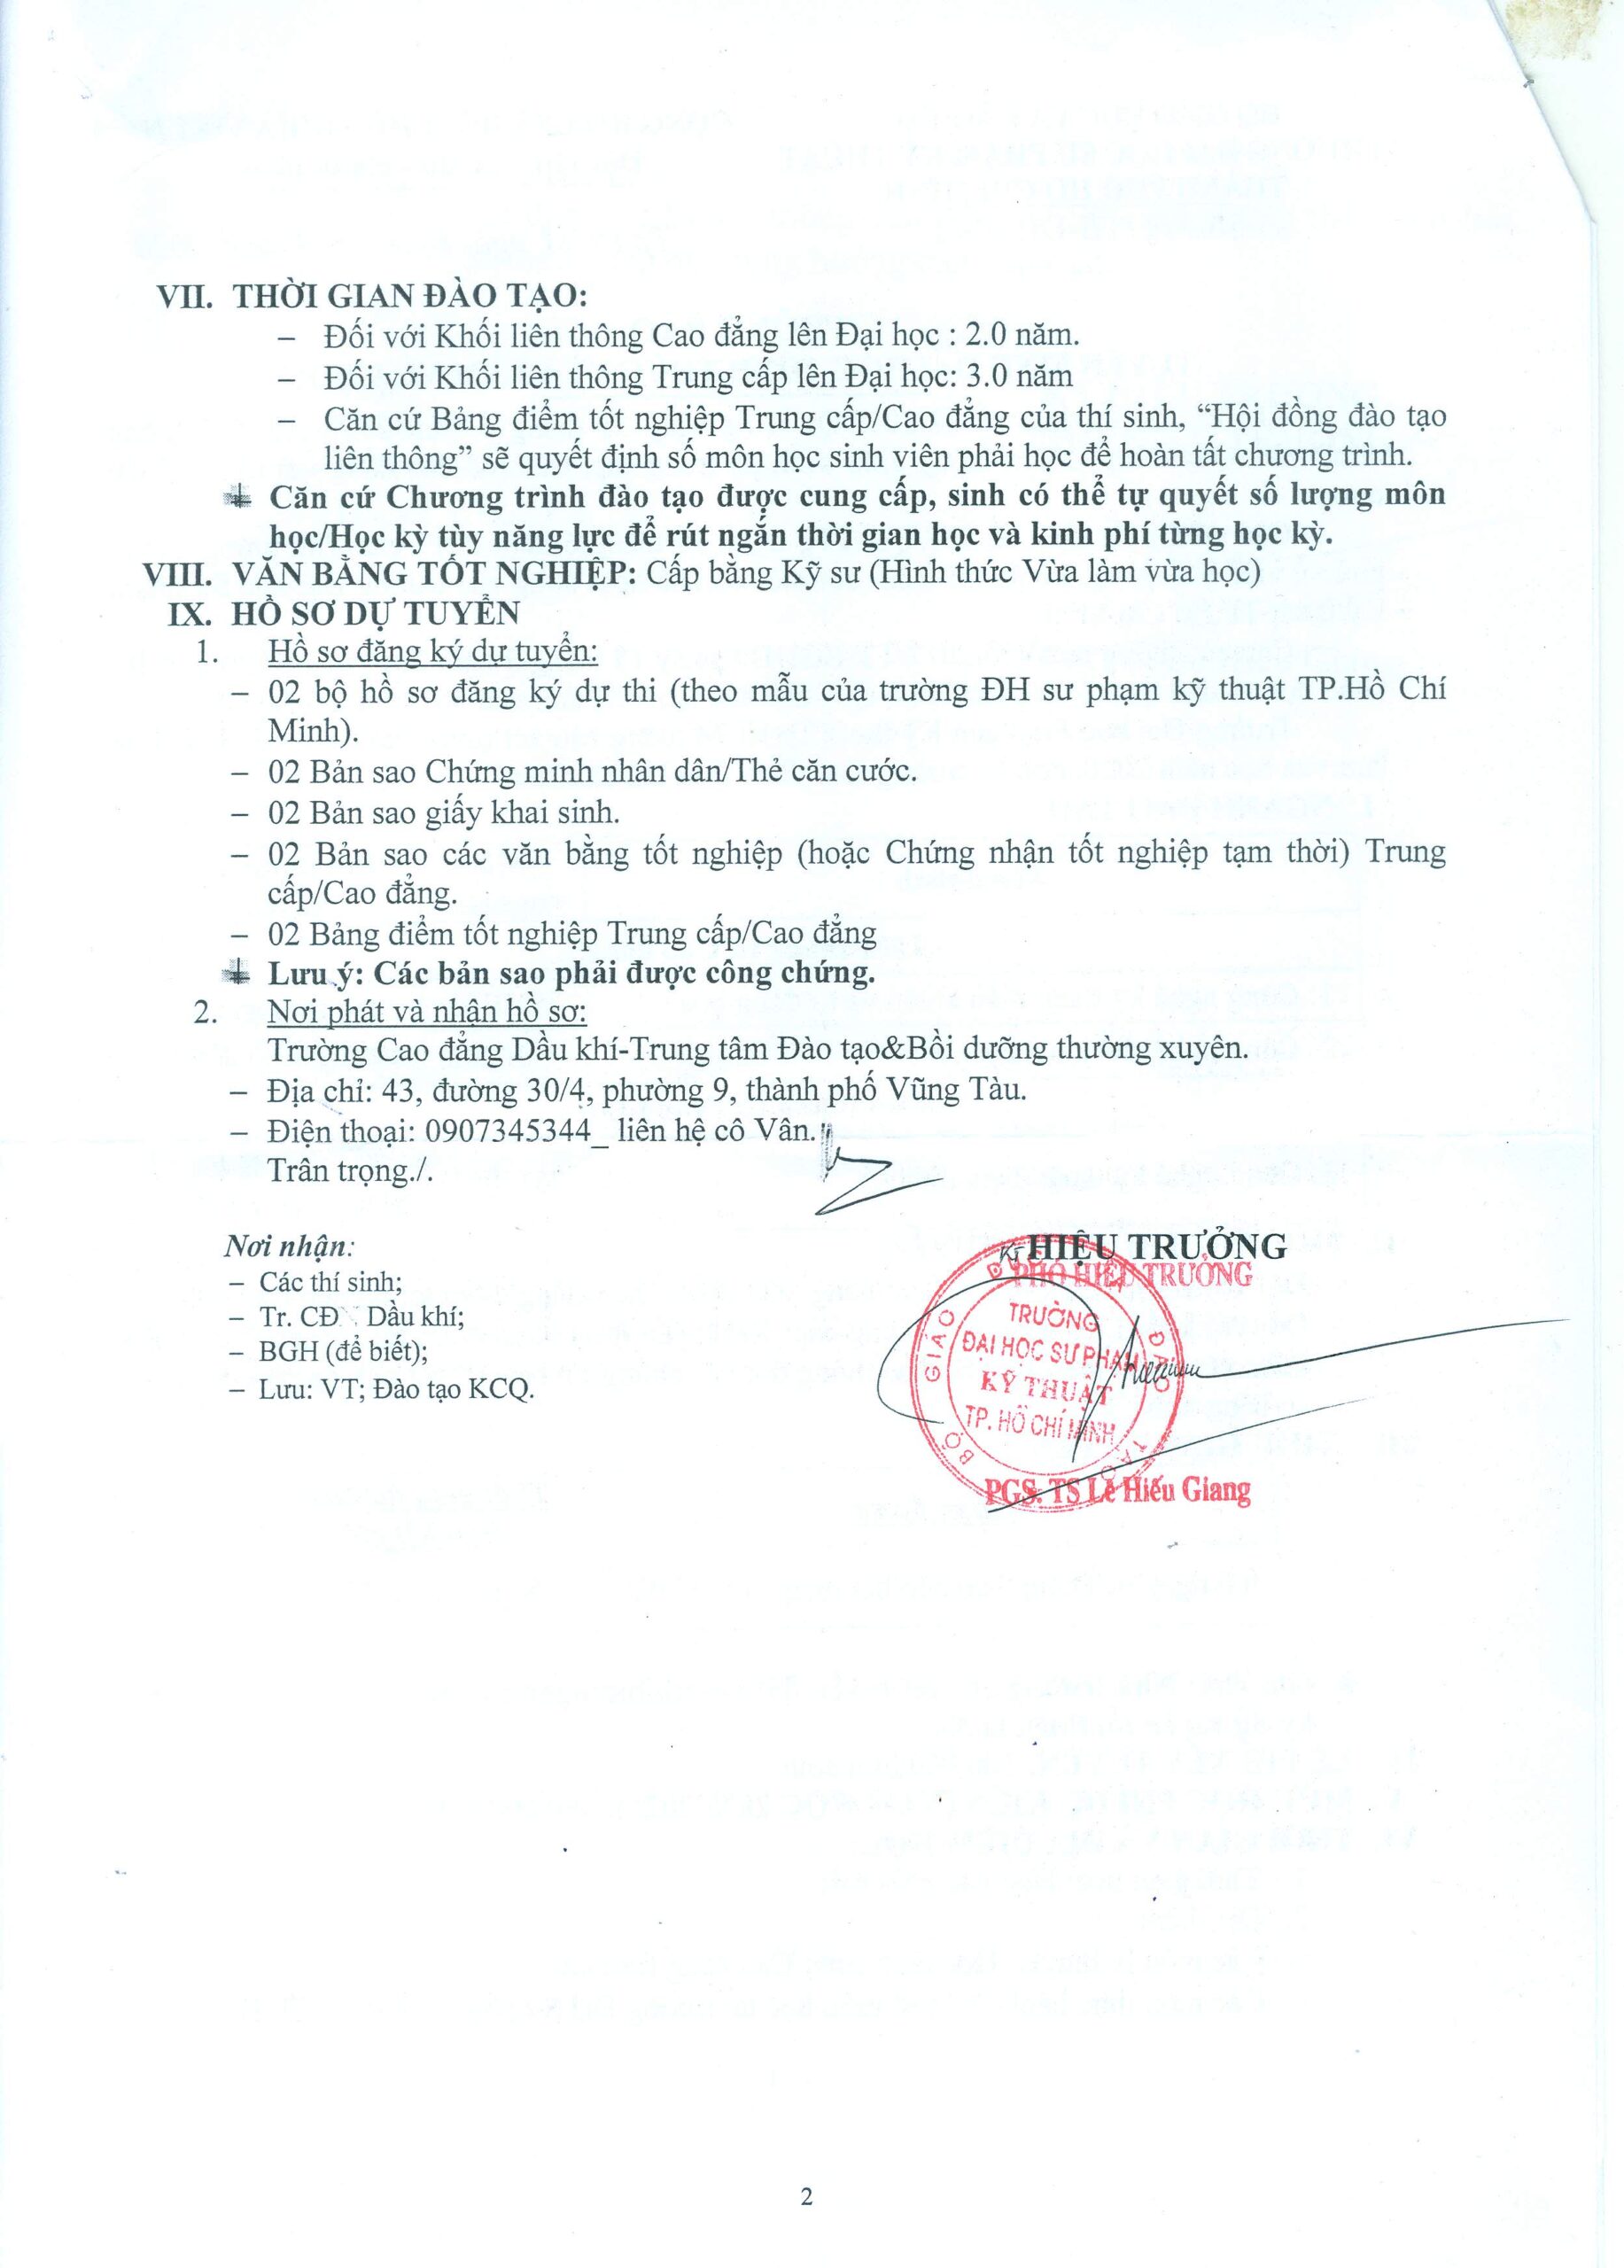 Thong Bao Tuyen Sinh Lien Thong Dhspkt 2020 Page 2 Image 0001